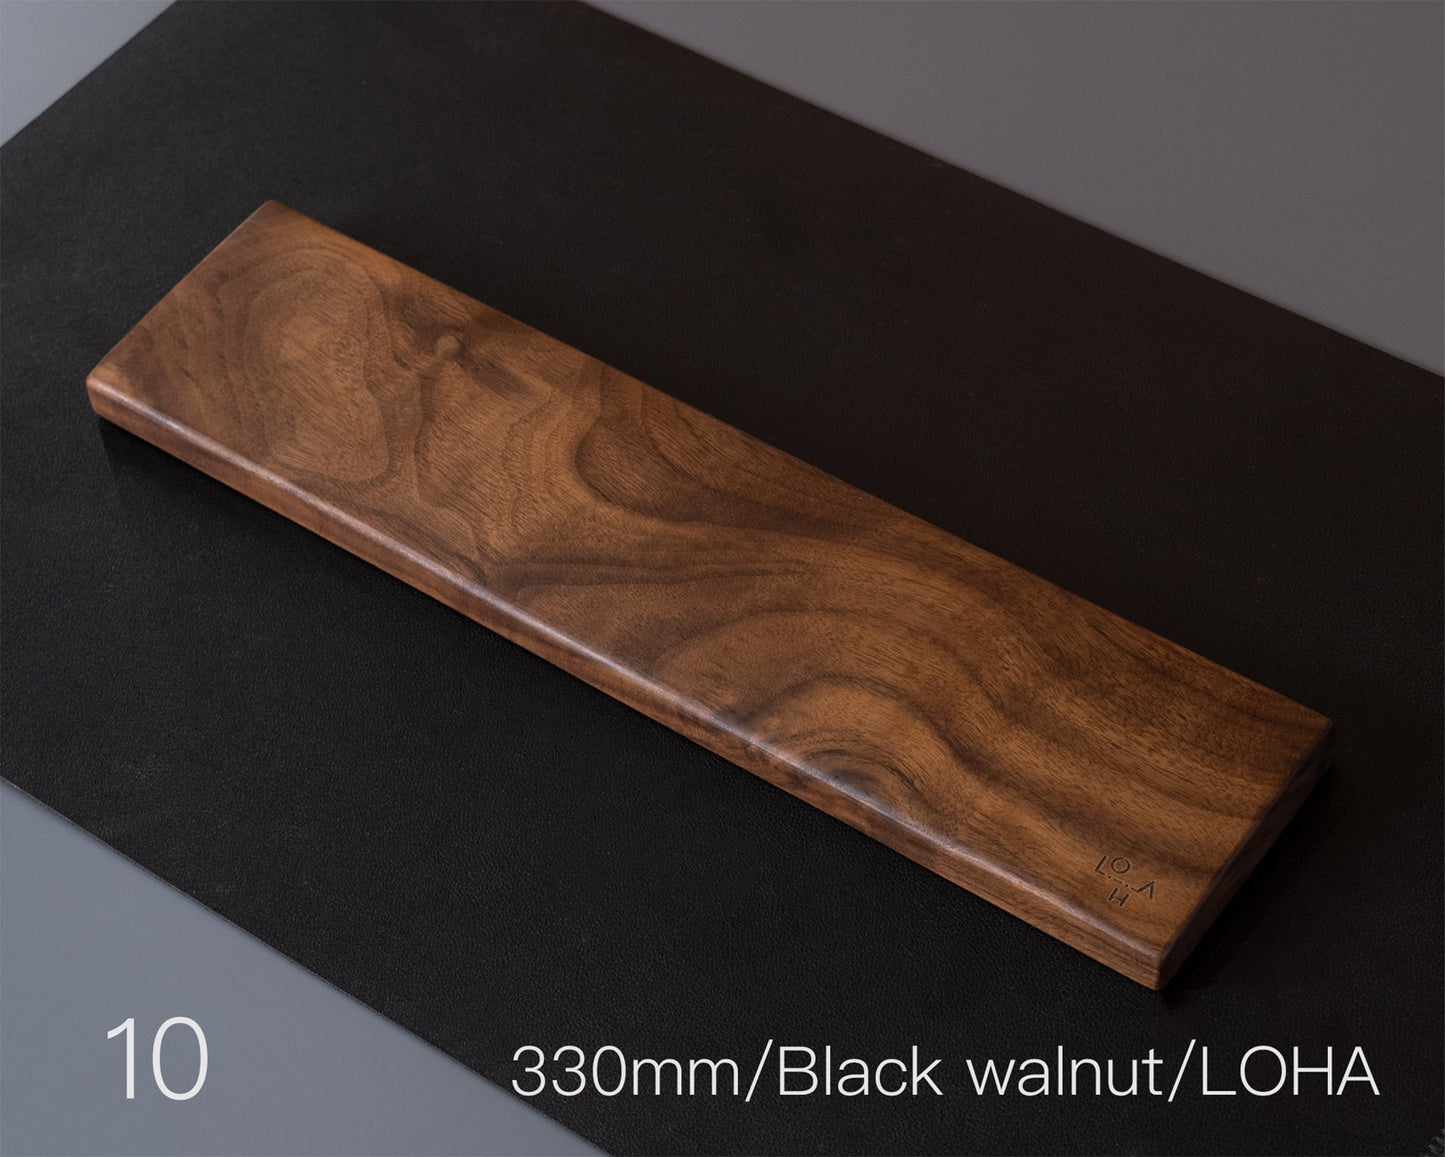 special-edition-walnut-wood-wrist-rest-10